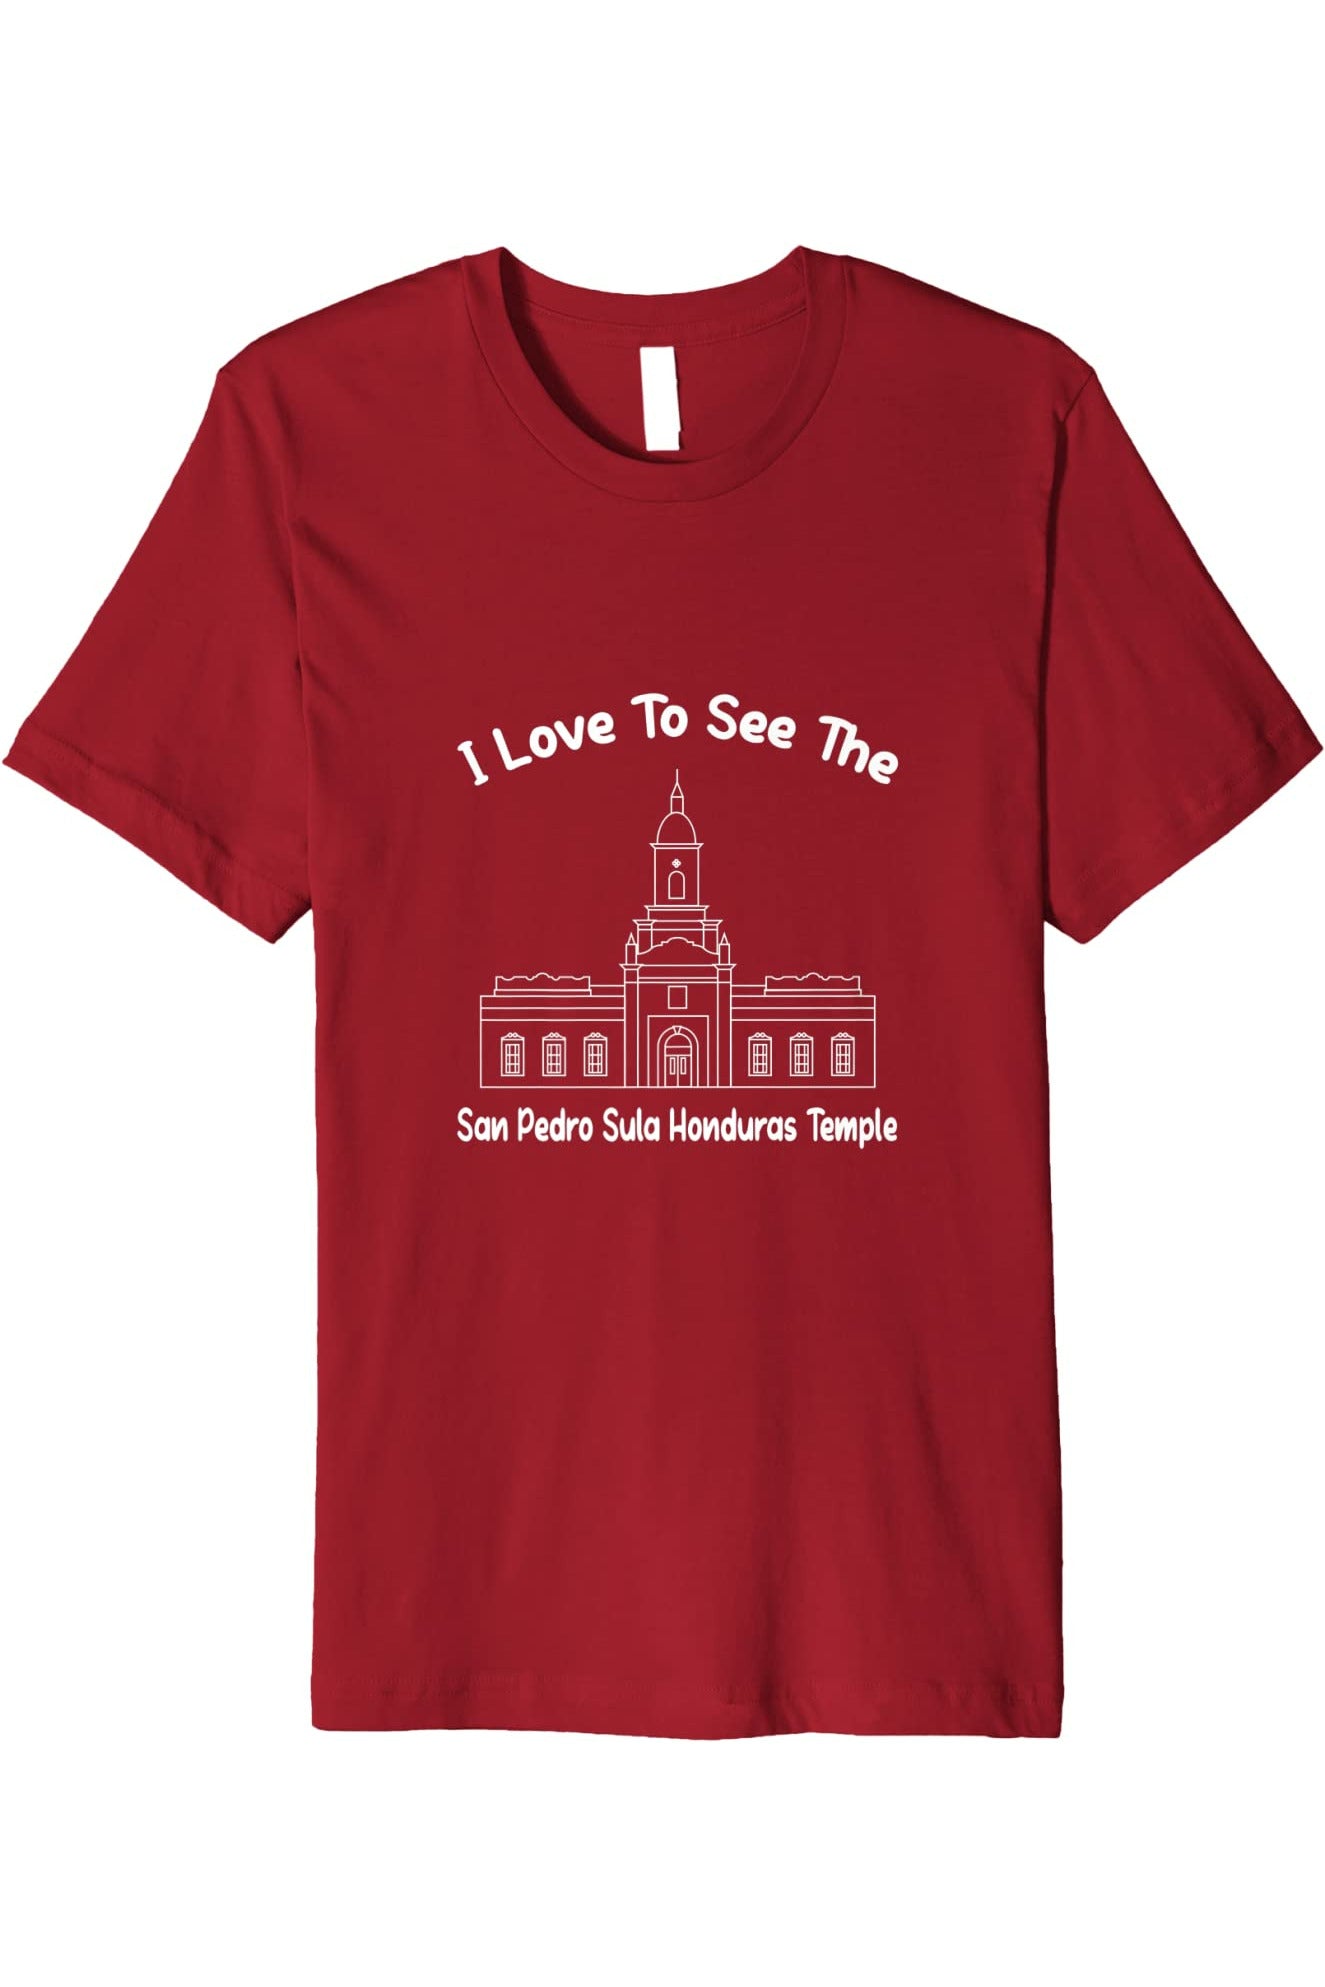 San Pedro Sula Honduras Temple T-Shirt - Premium - Primary Style (English) US